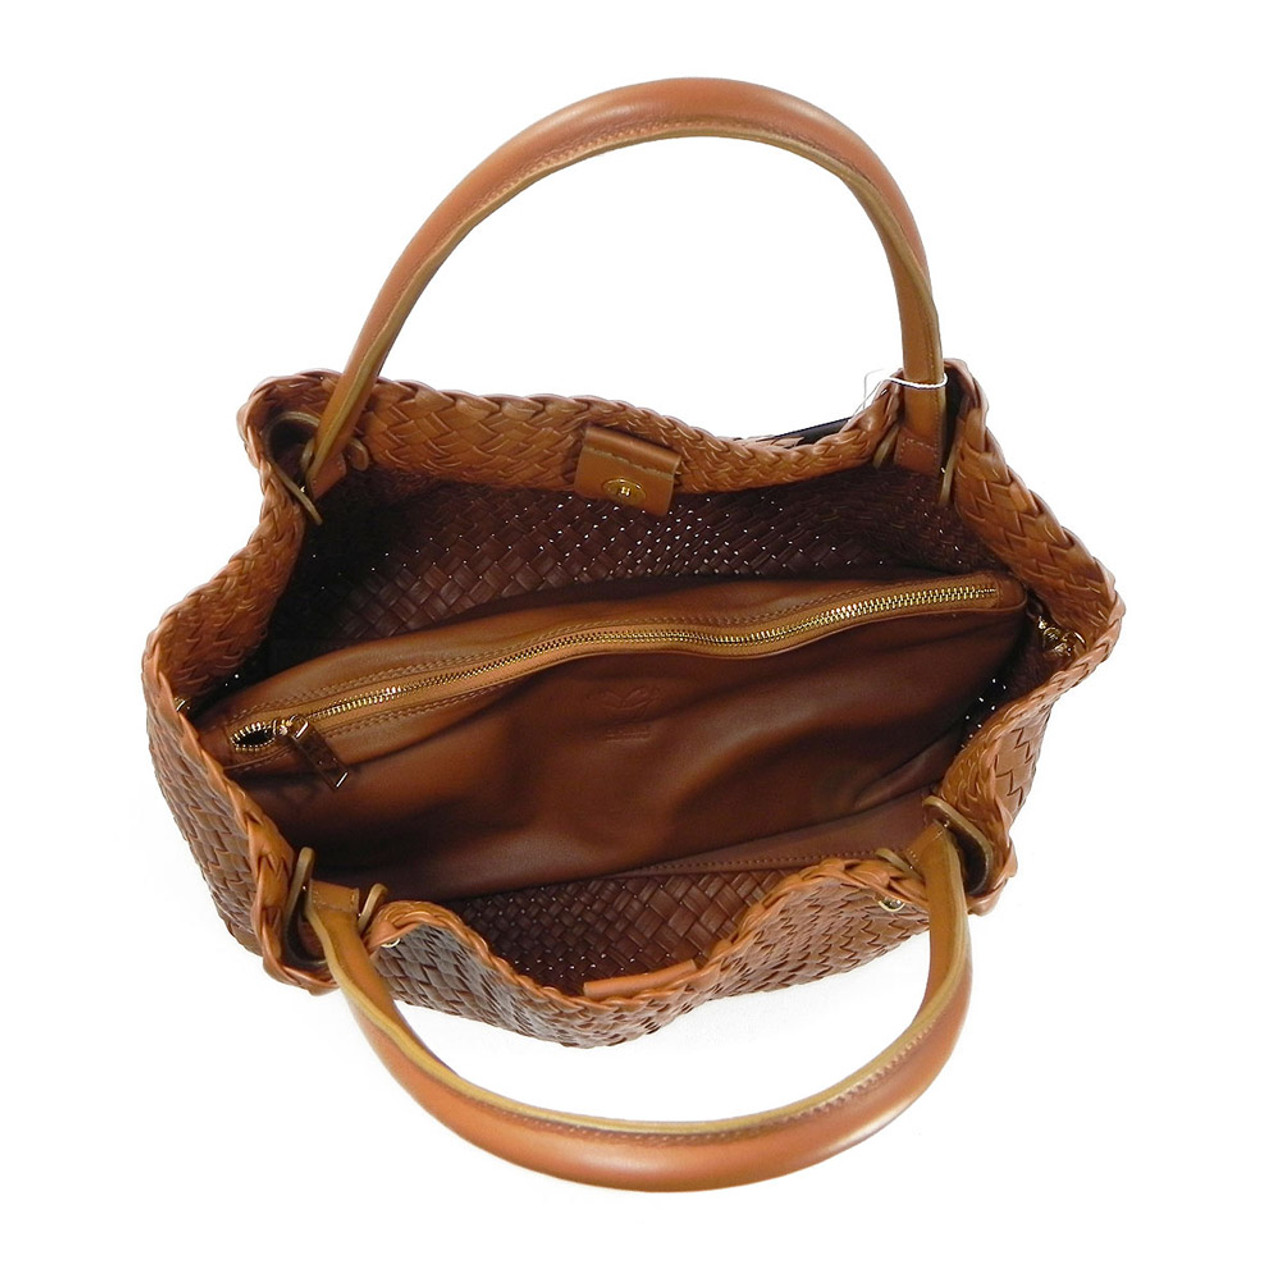 Ghibli Luxury Hand Woven Italian Leather Tote Bag - Cream